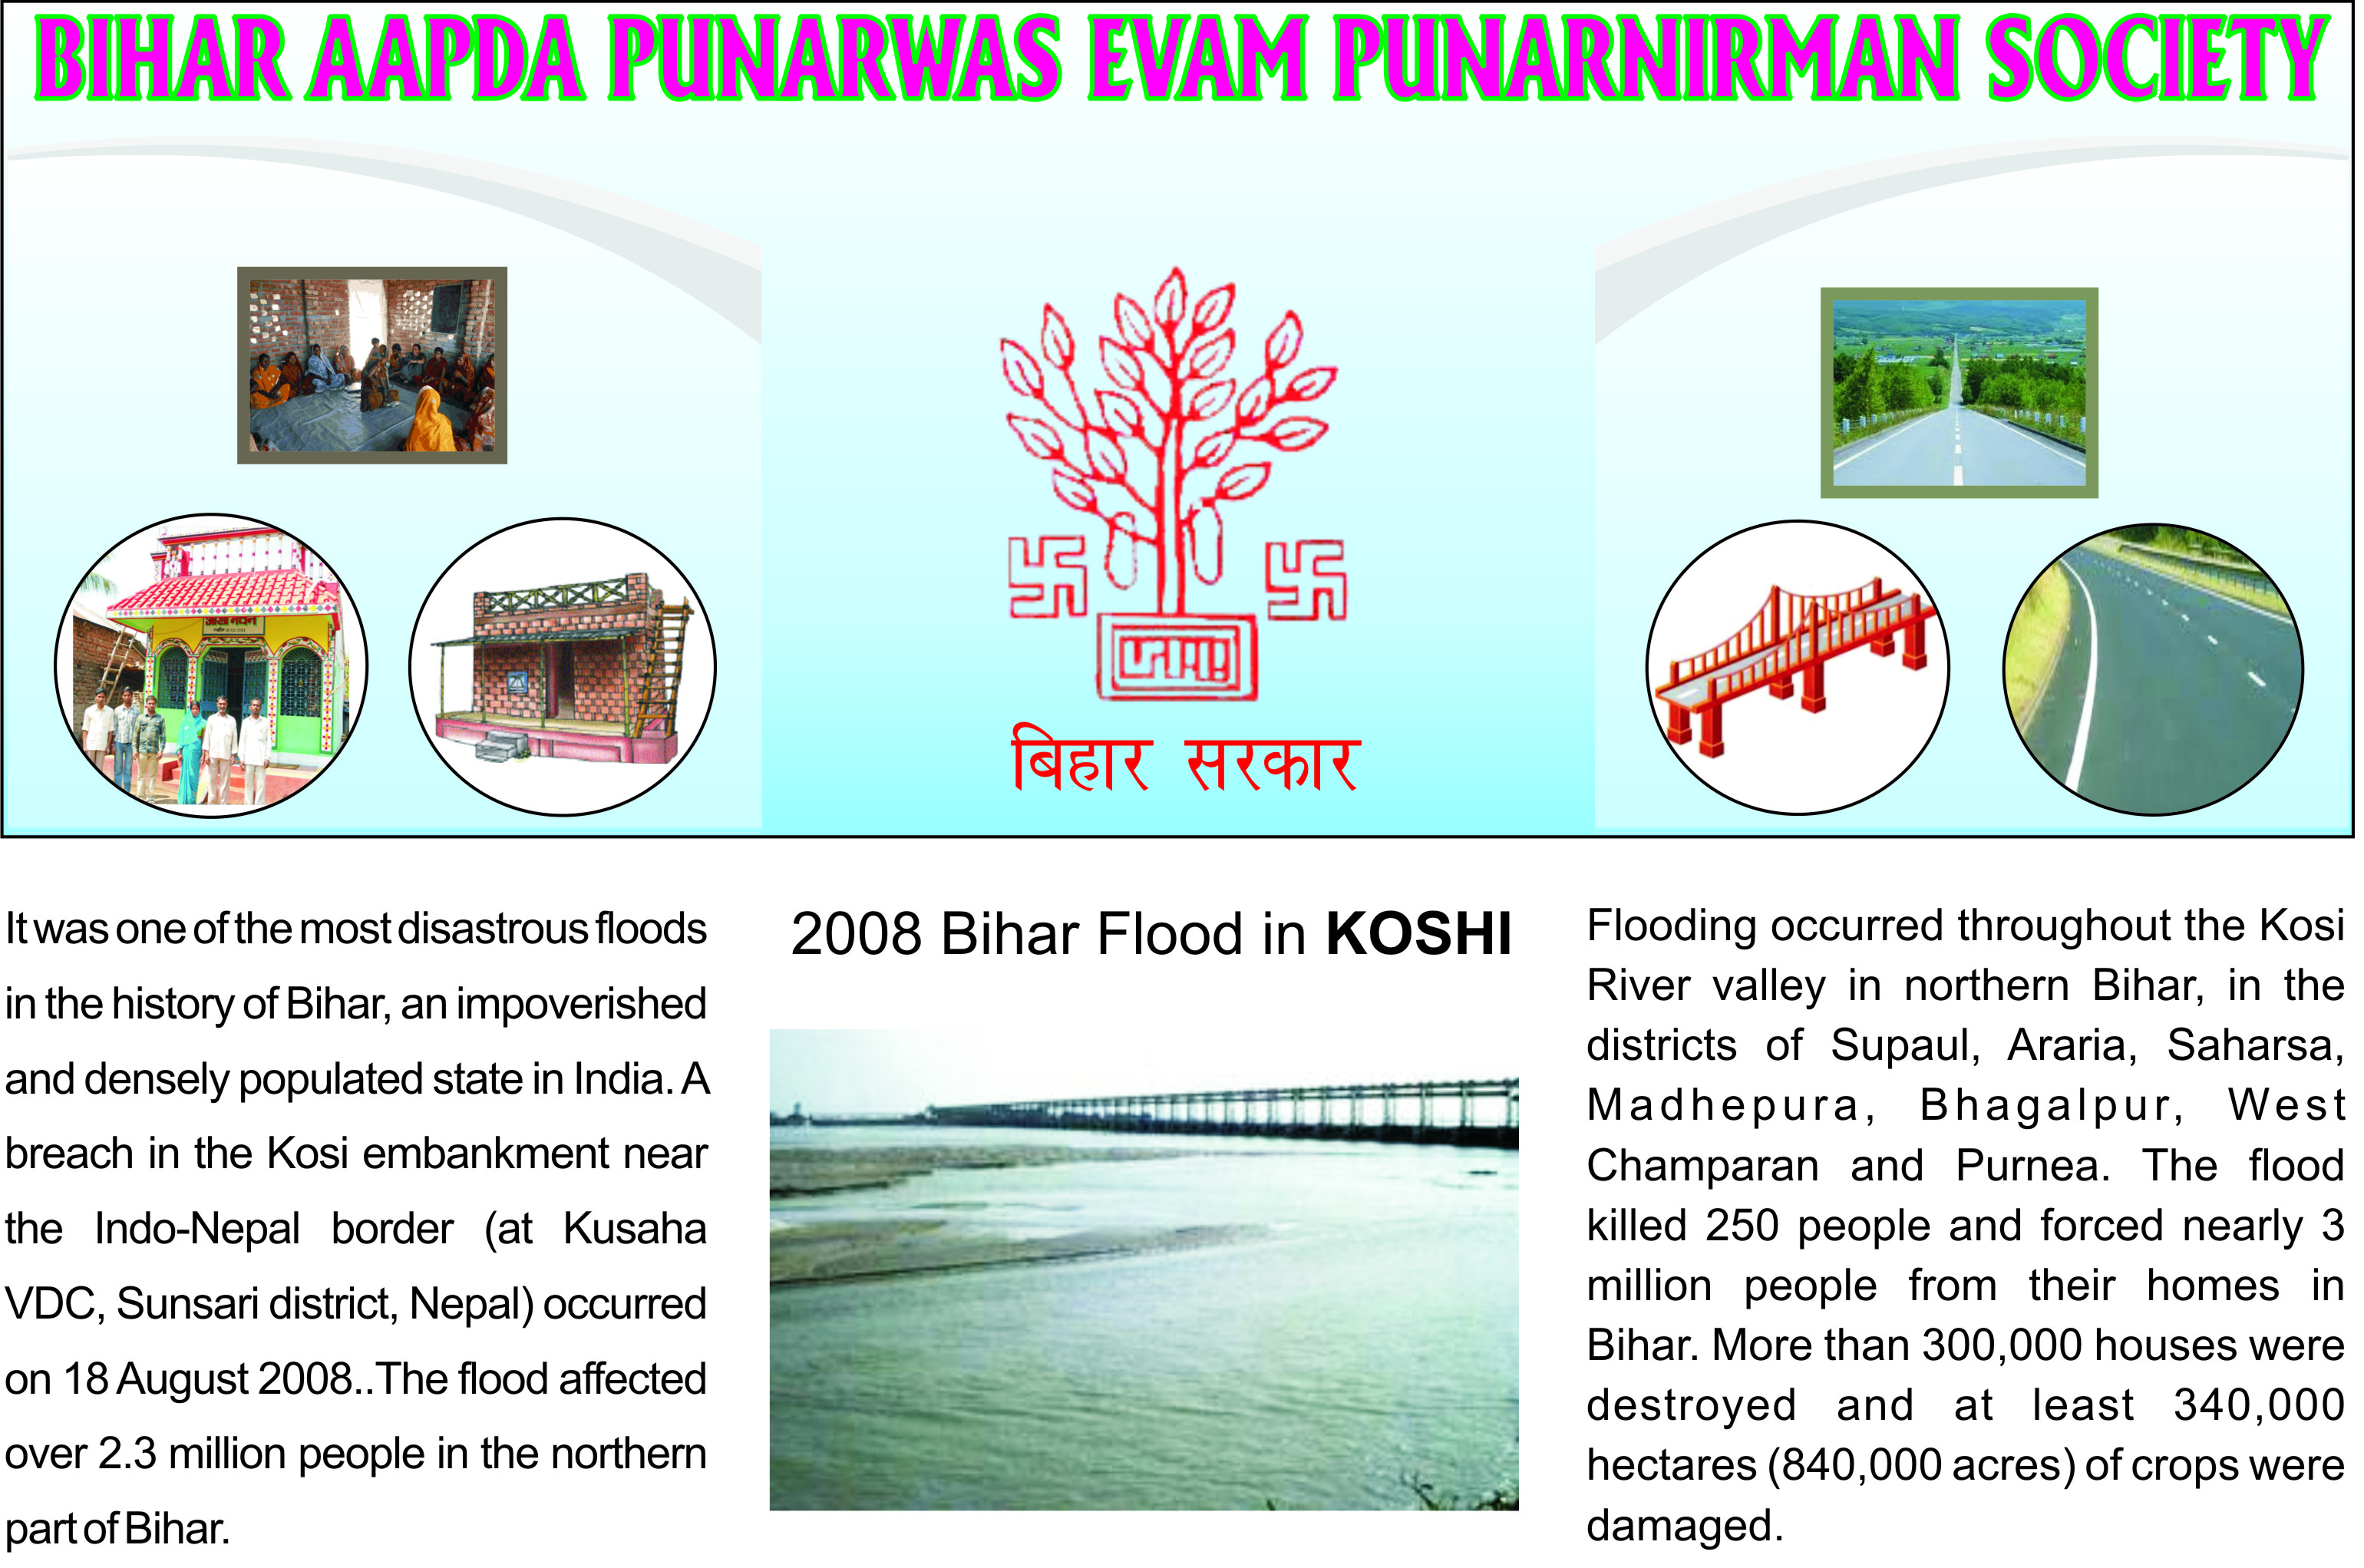 Bihar Aapda Punarwas Evam Punarnirman Society